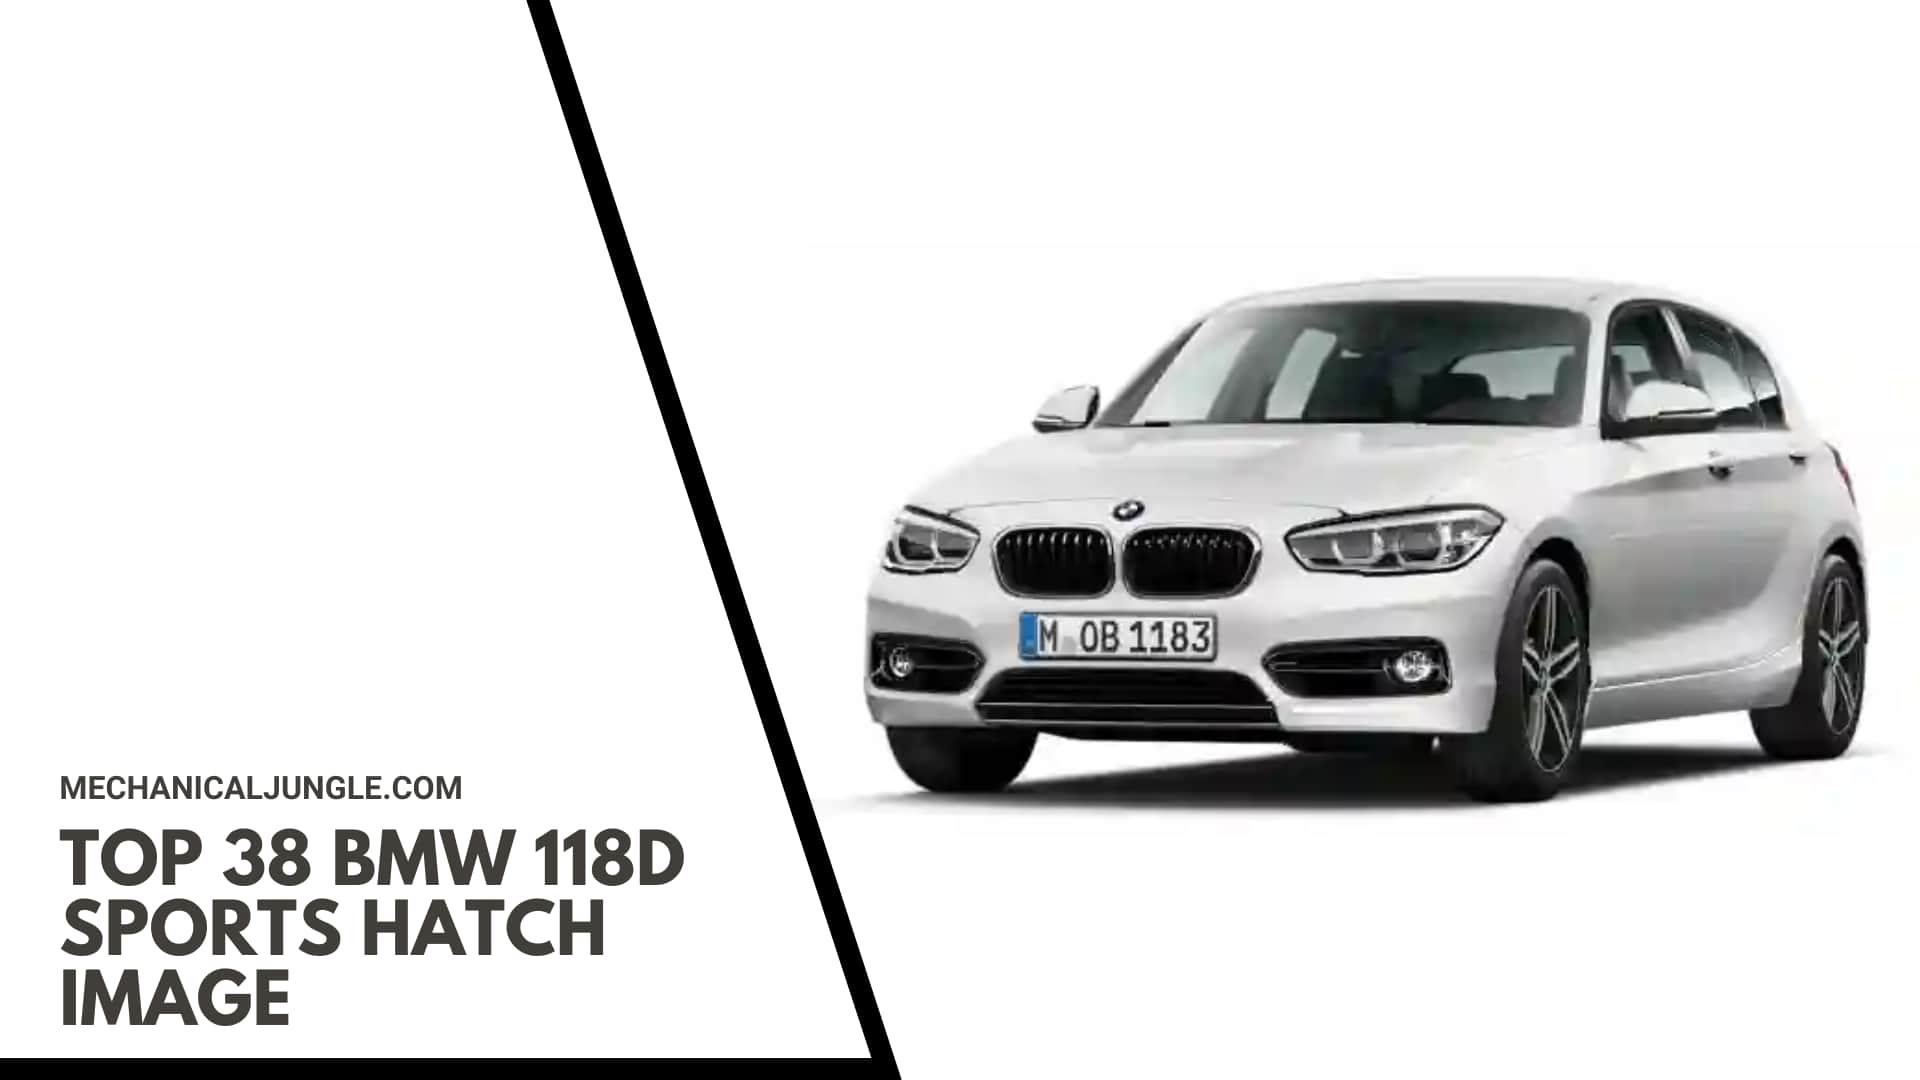 Top 38 BMW 118d Sports Hatch Image